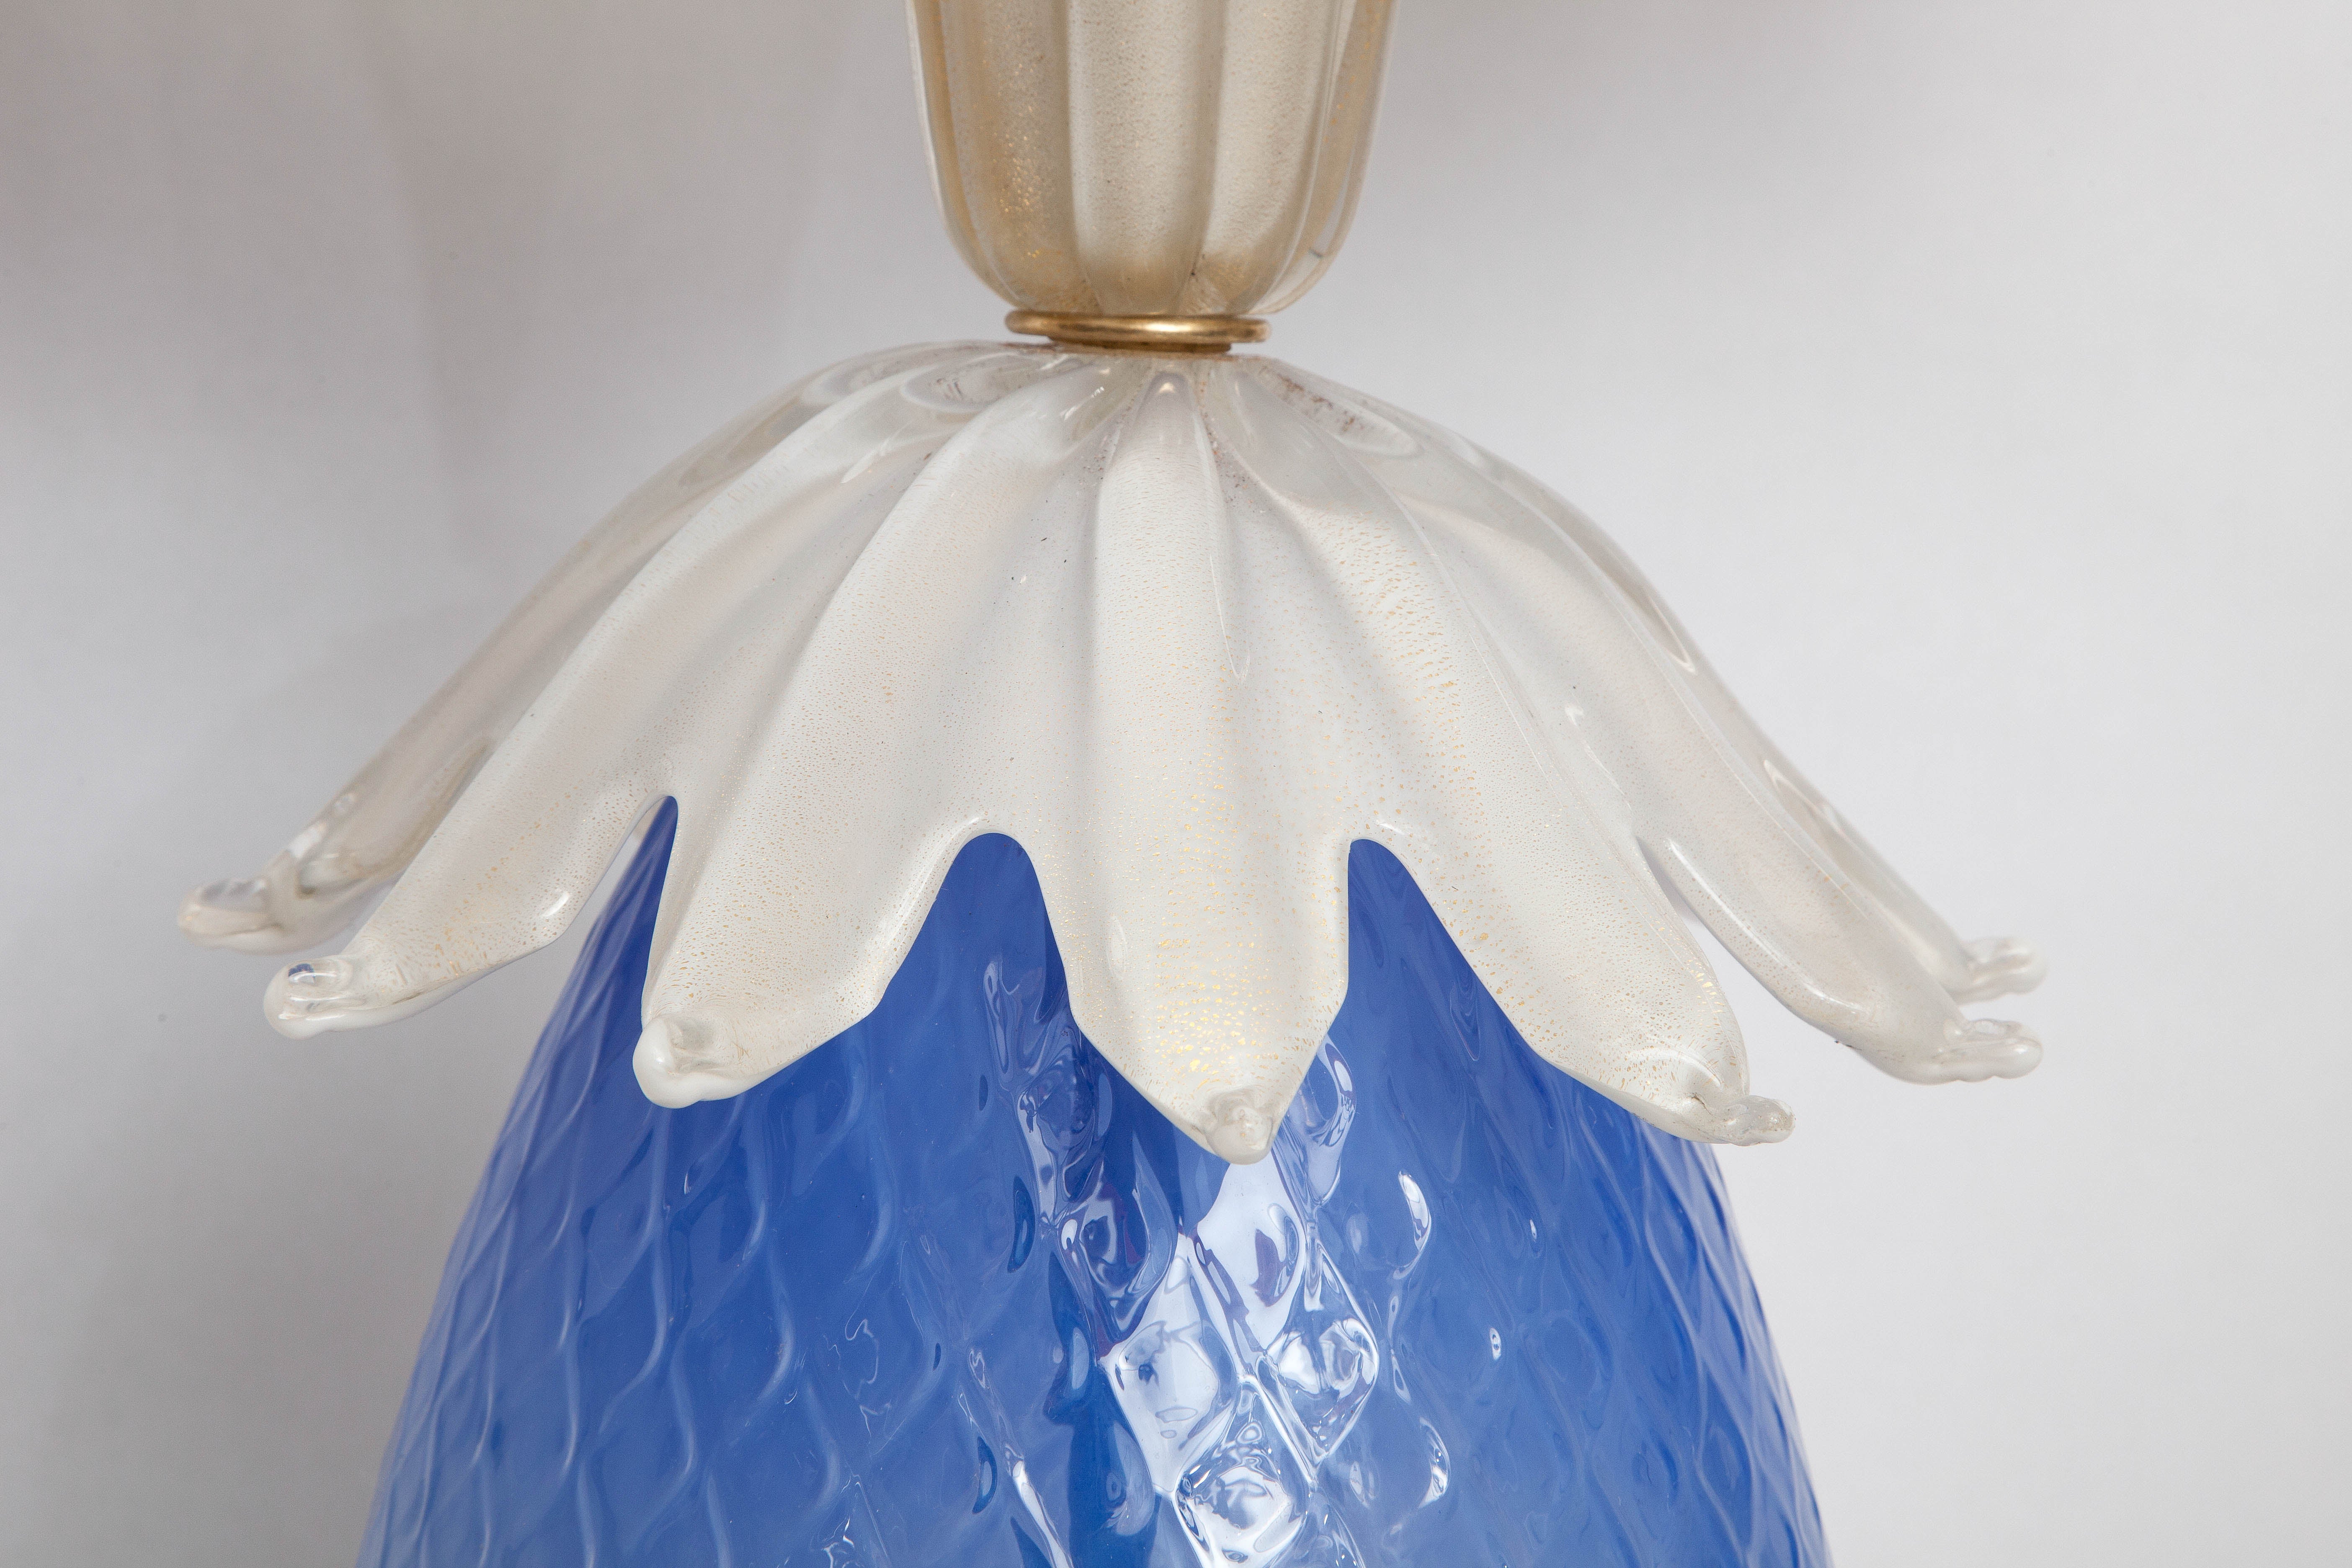  Martenuzzi Table Lamp Murano Glass Mid Century Modern Italy 1950's 1